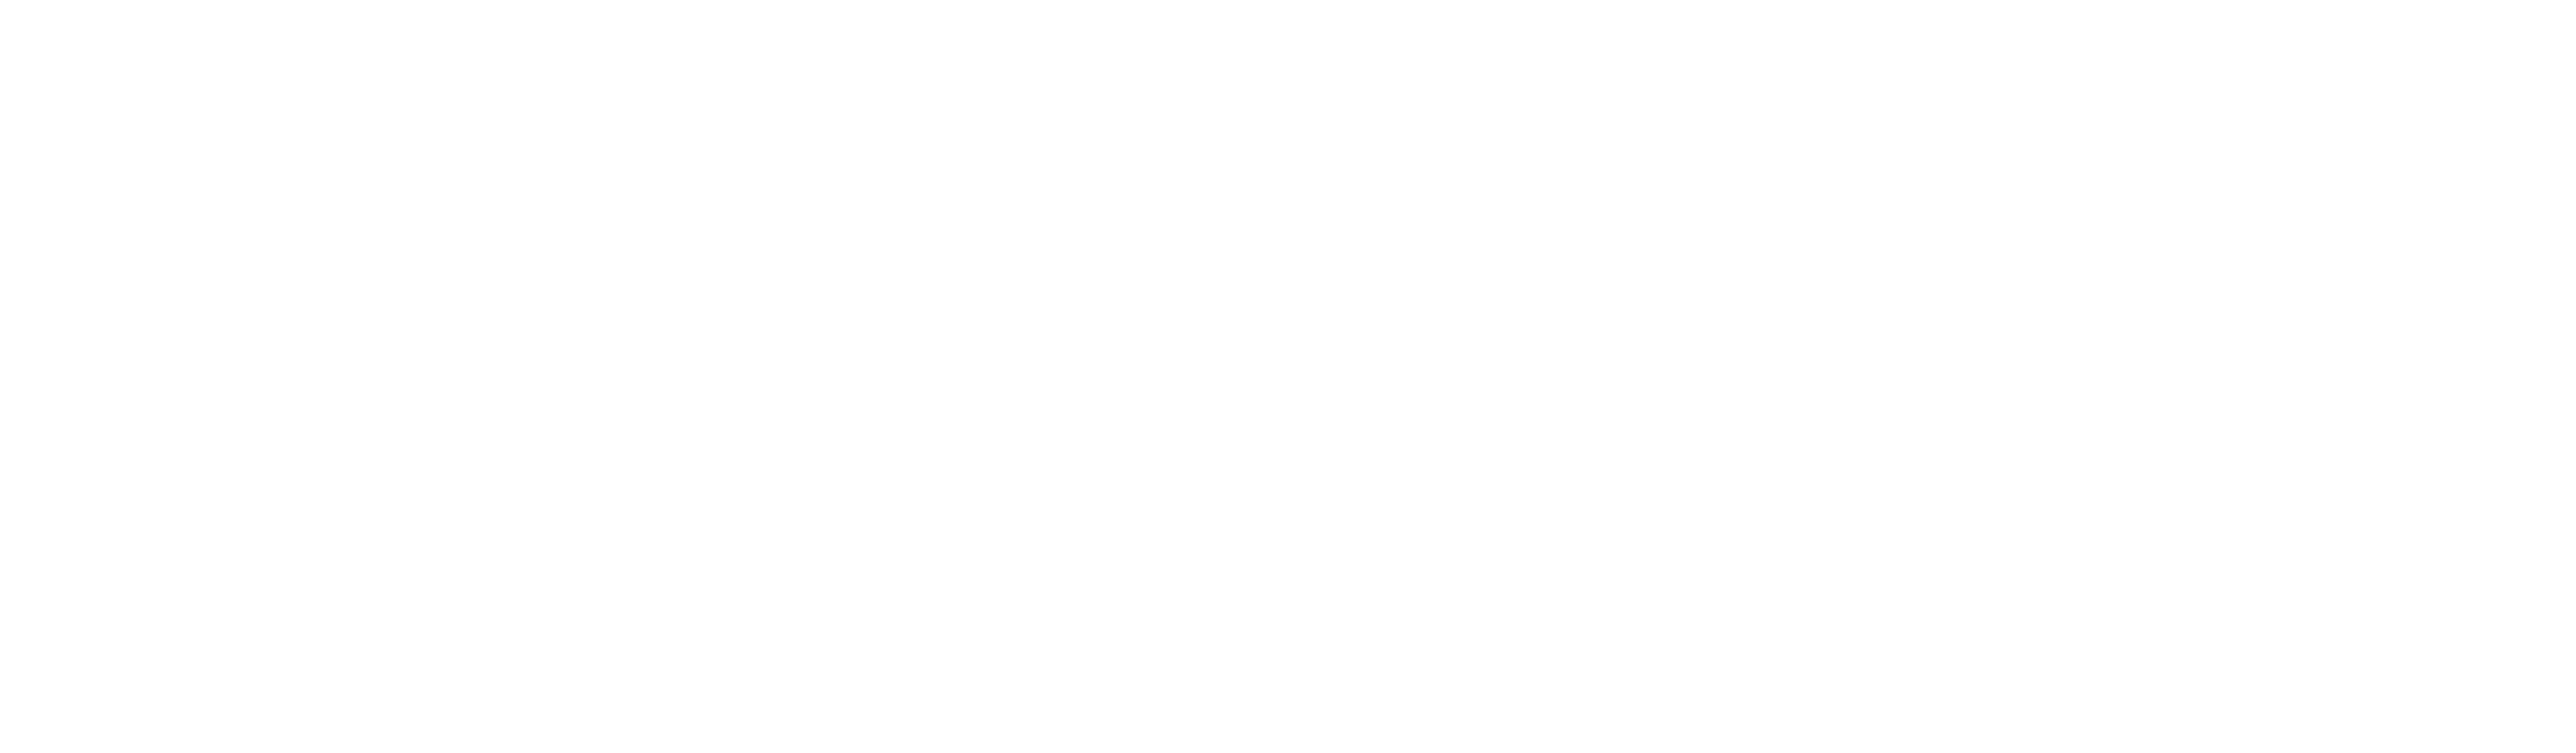 Continuous Improvement Performance Initiative logo